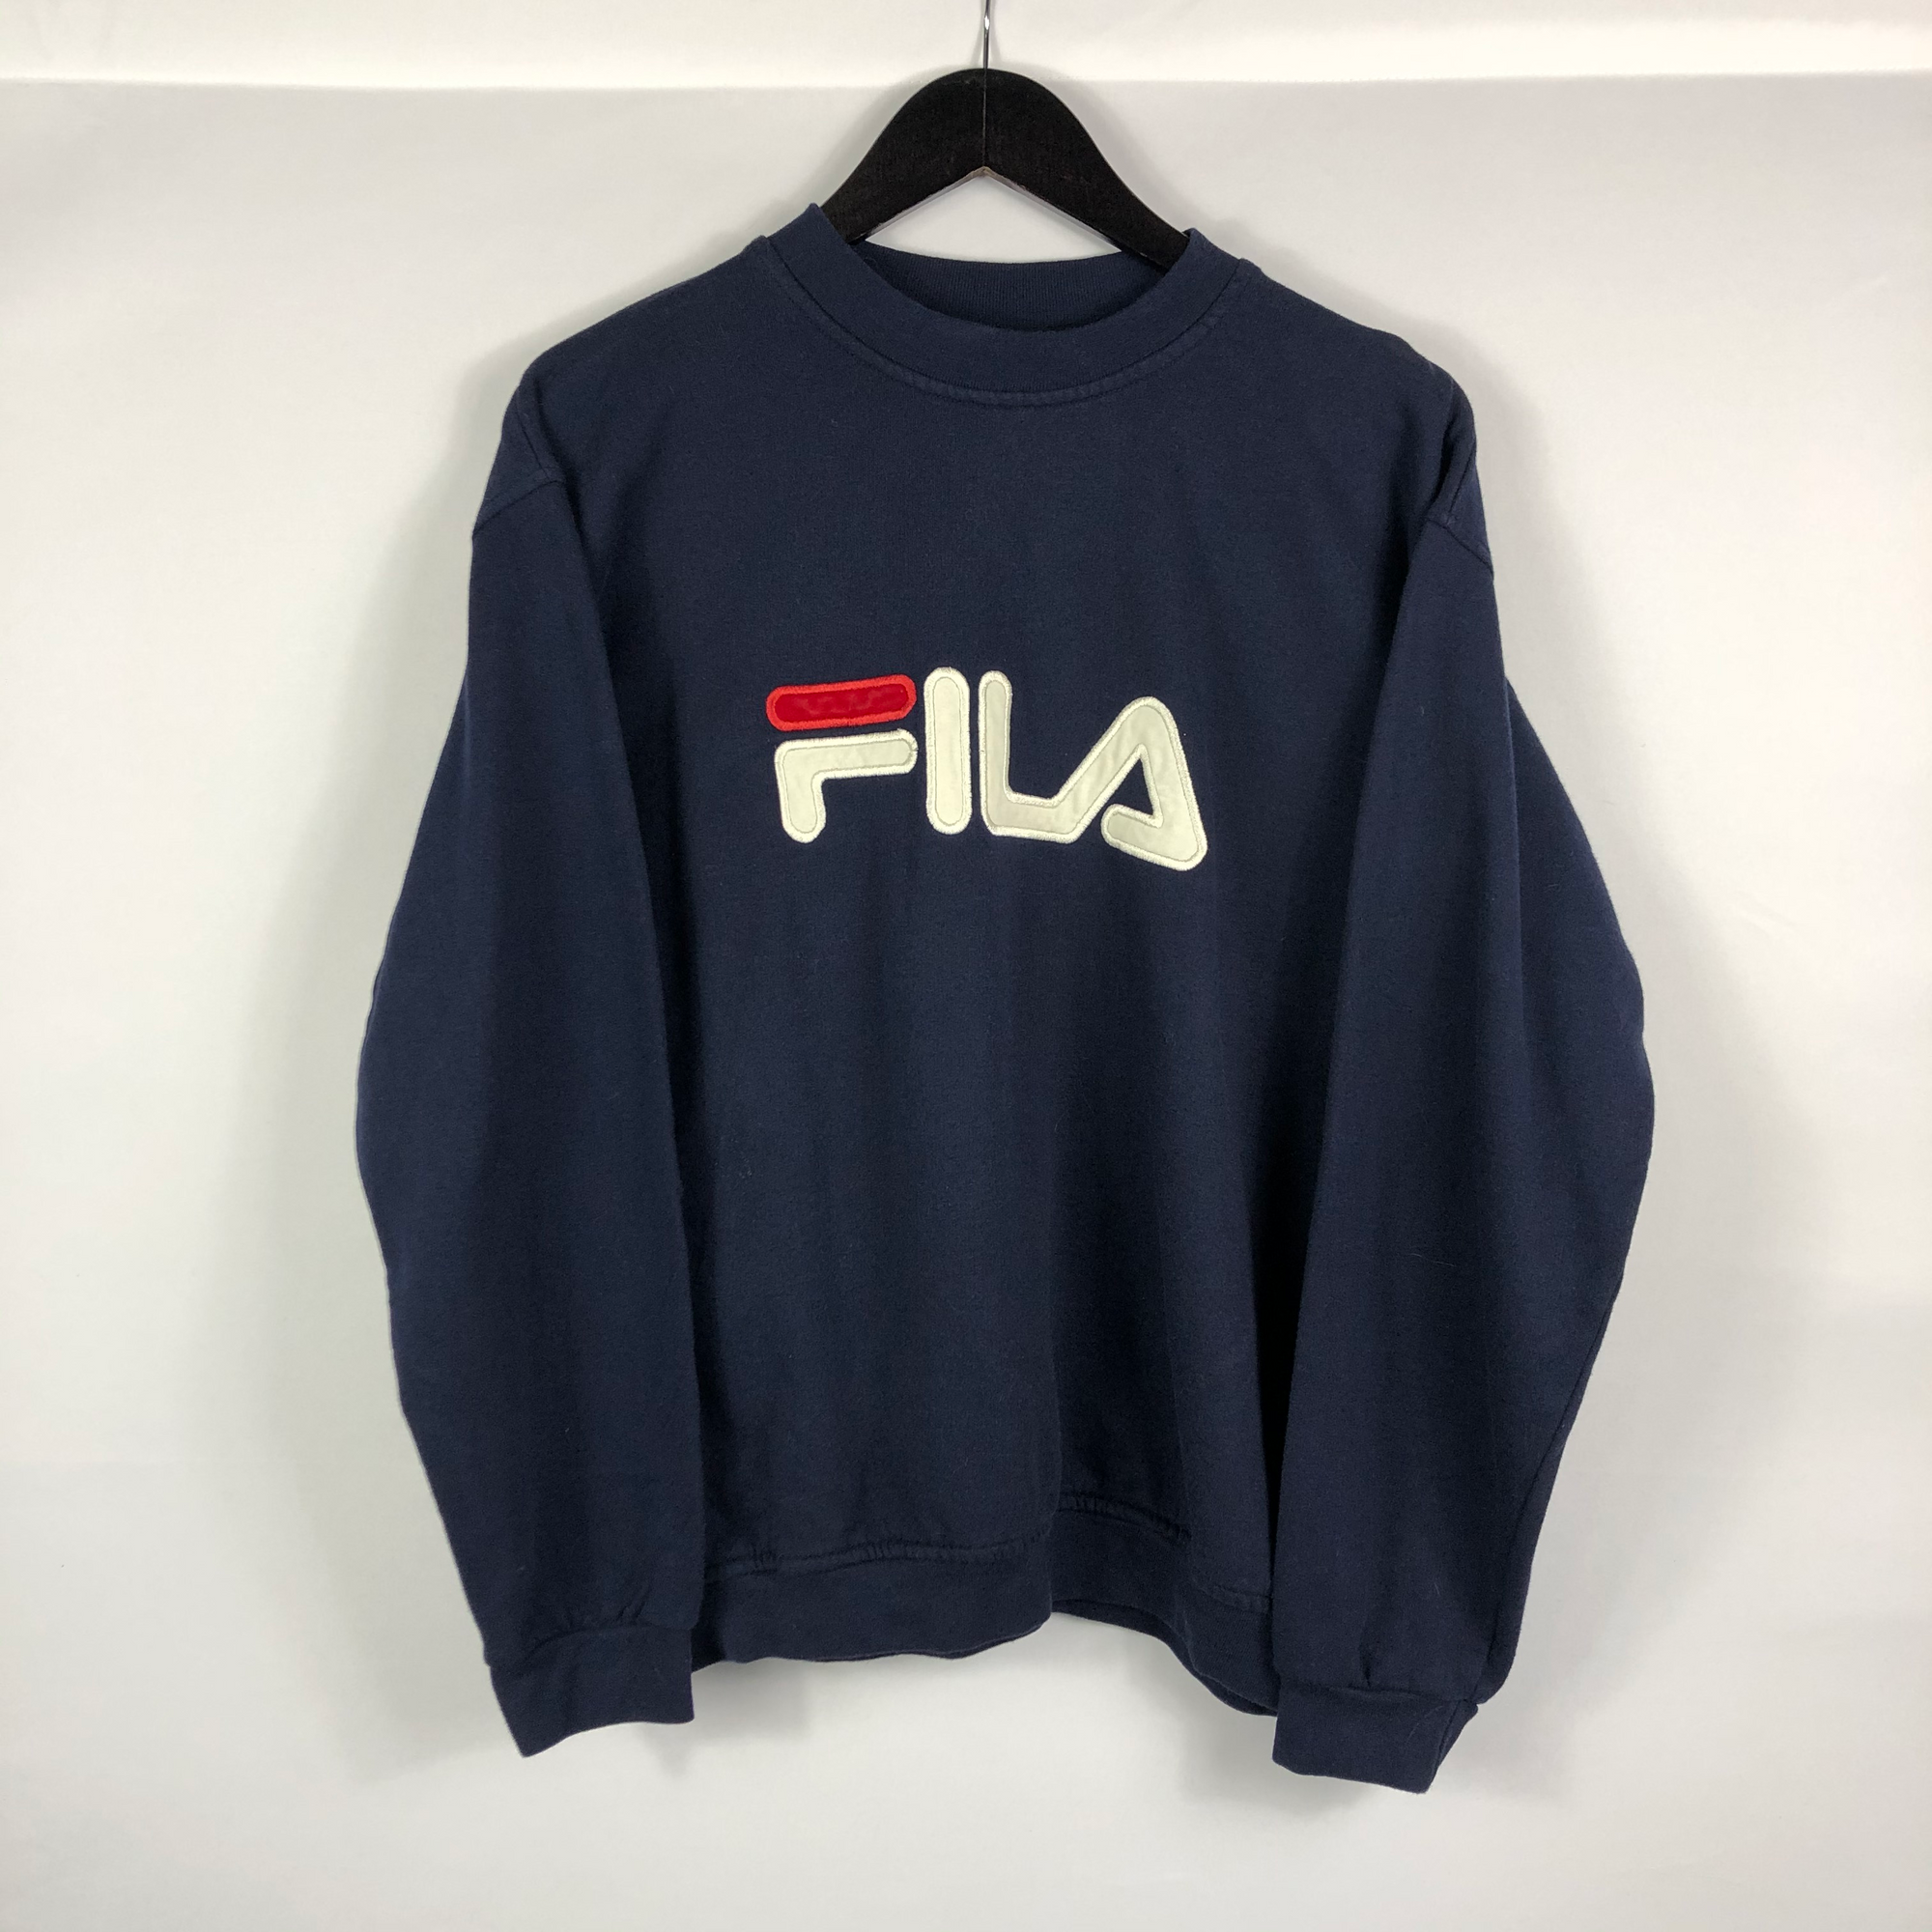 Vintage Fila Spellout Sweatshirt - Men's Medium/ Women's Large